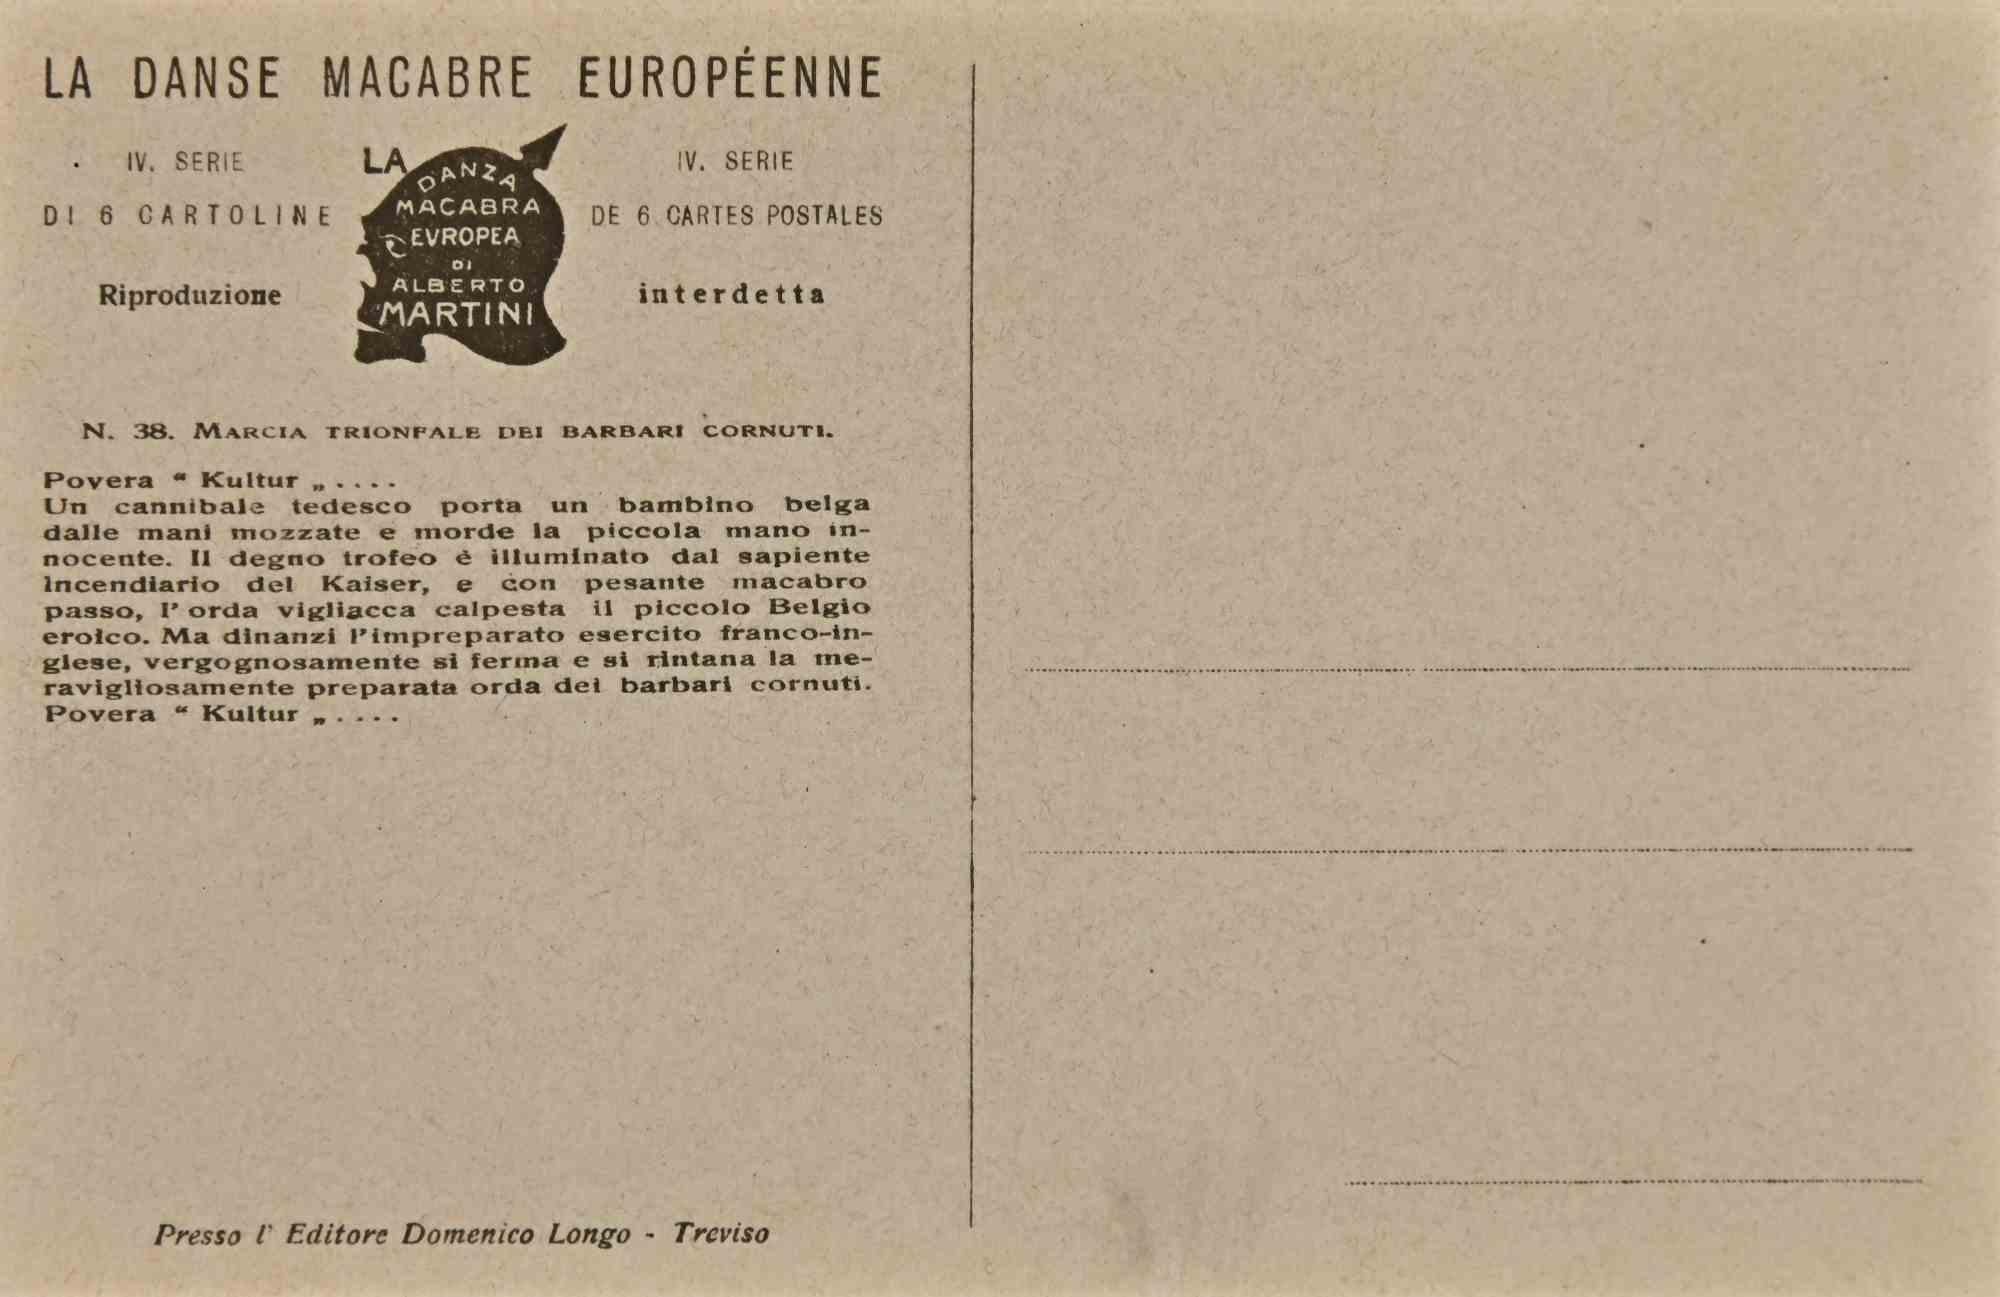 The European Macabre Dance N.38  - Lithograph by A. Martini - 1915 - Print by Alberto Martini